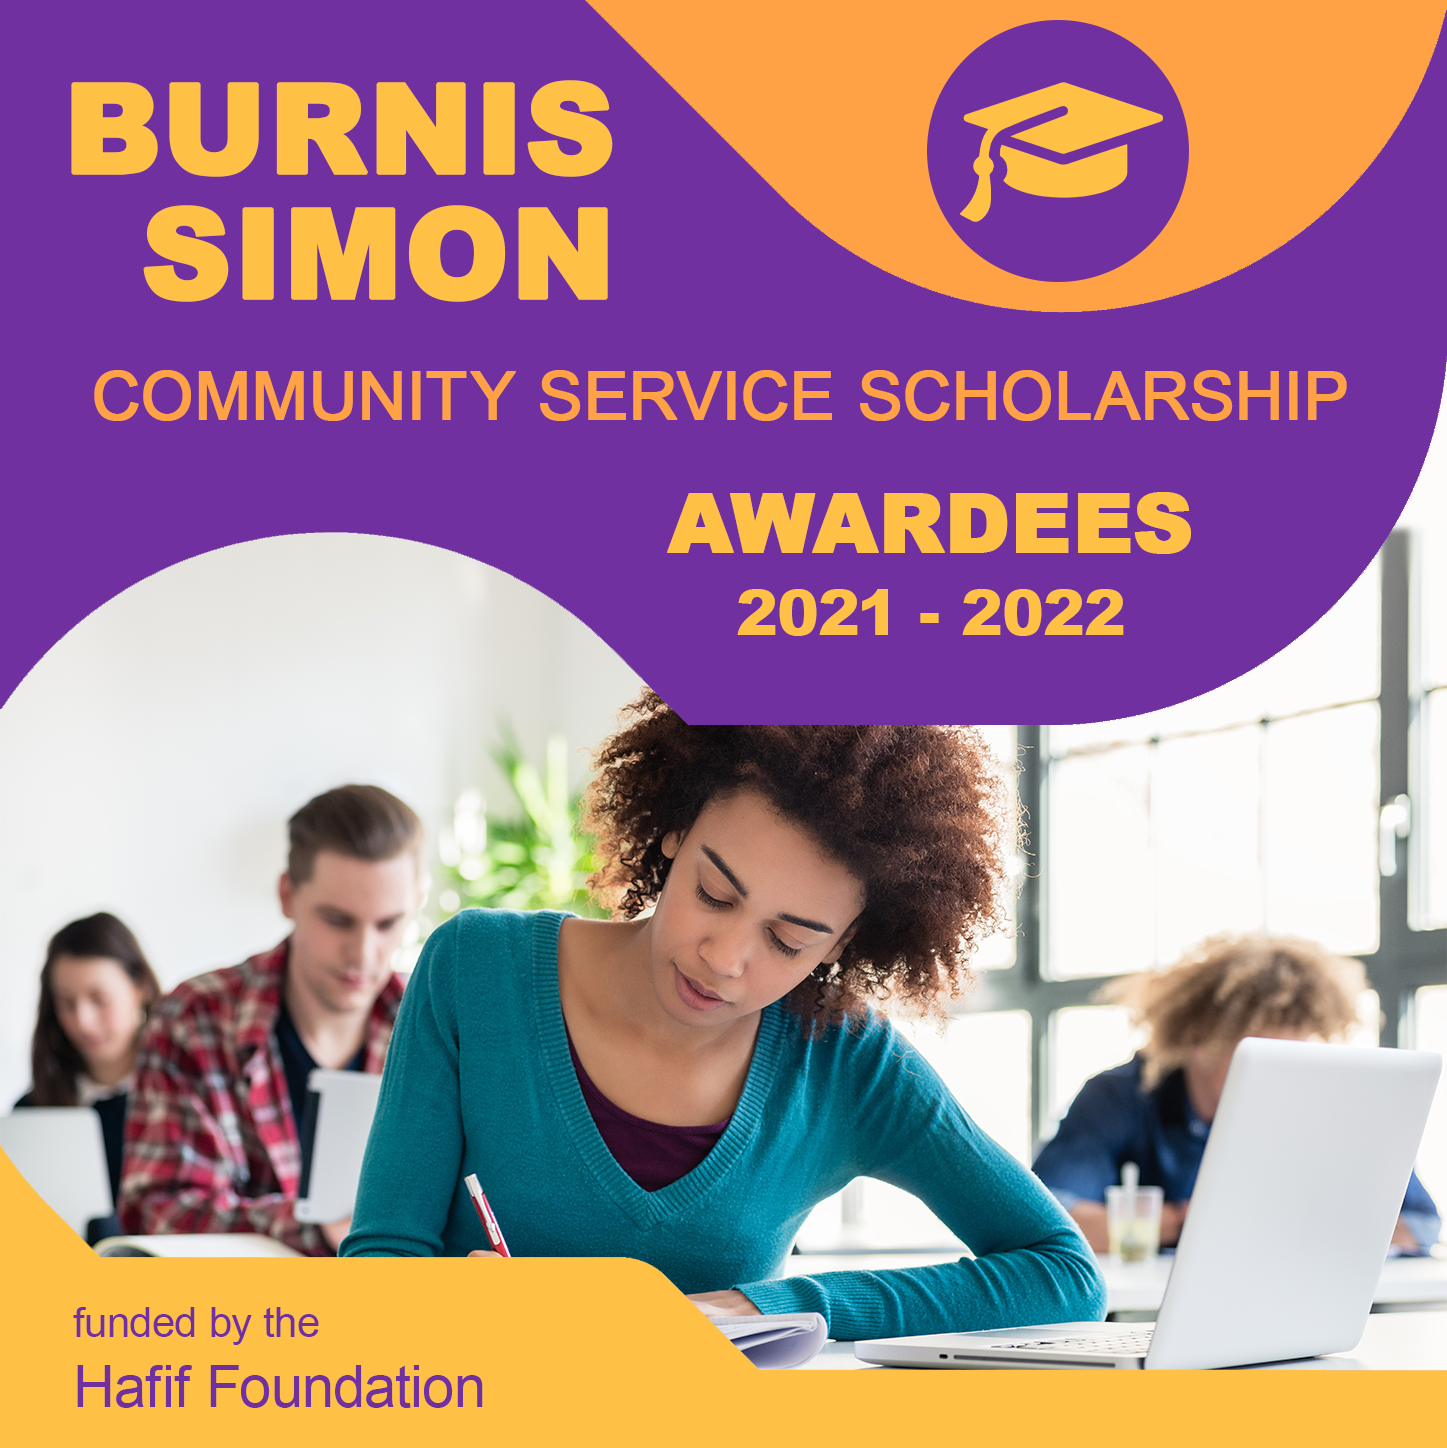 Burnis Simon Community Service Scholarship Awardees 2021 - 2022 funded by the Hafif Foundation